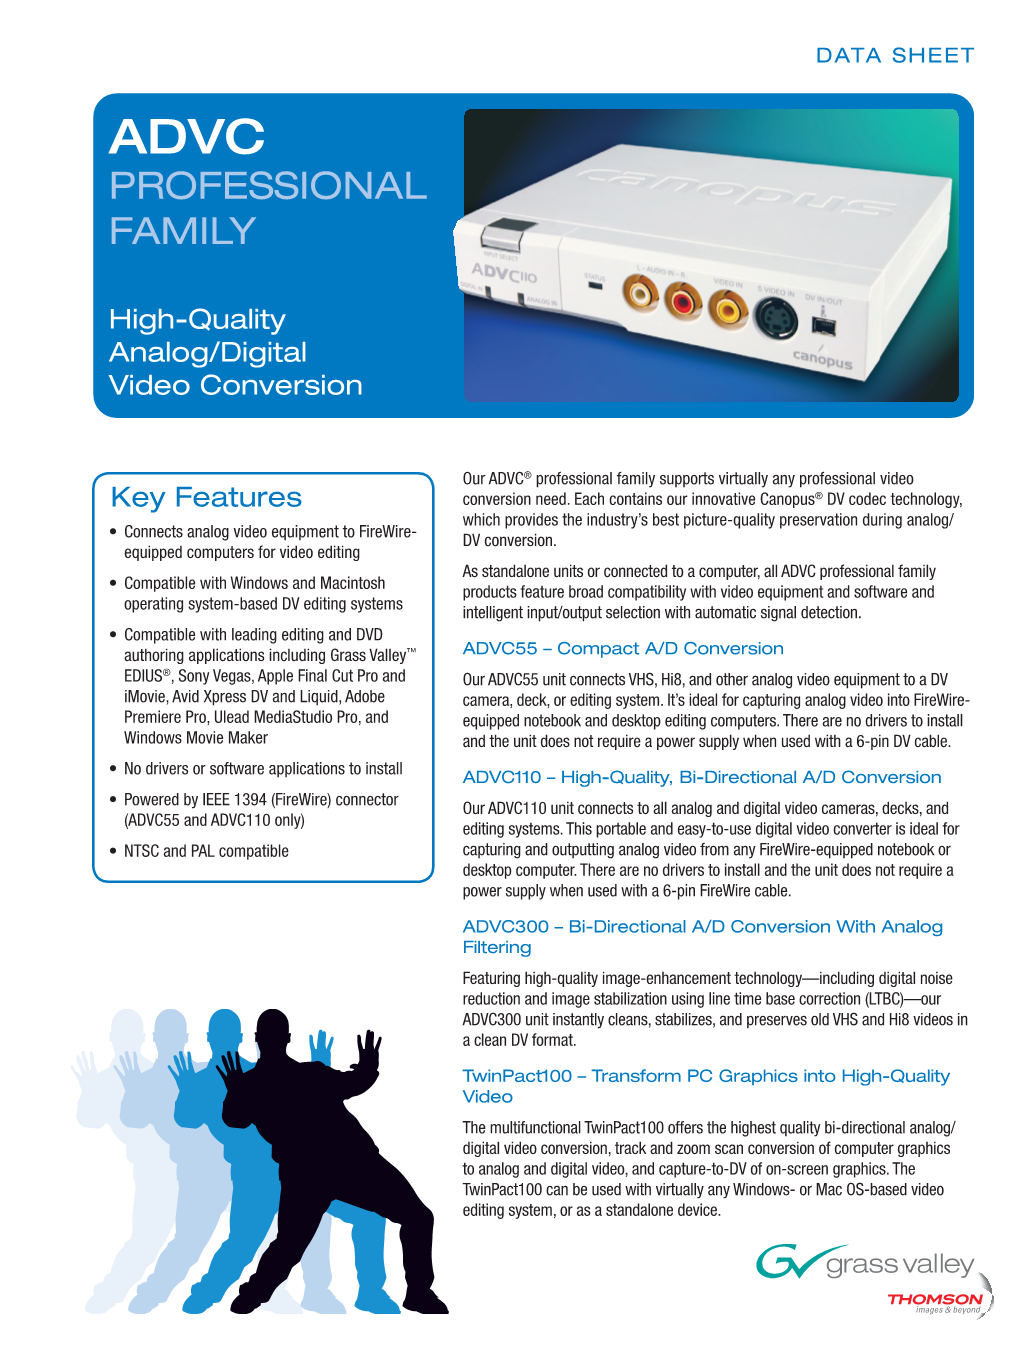 ADVC Professional Family Analog/Digital Video Conversion